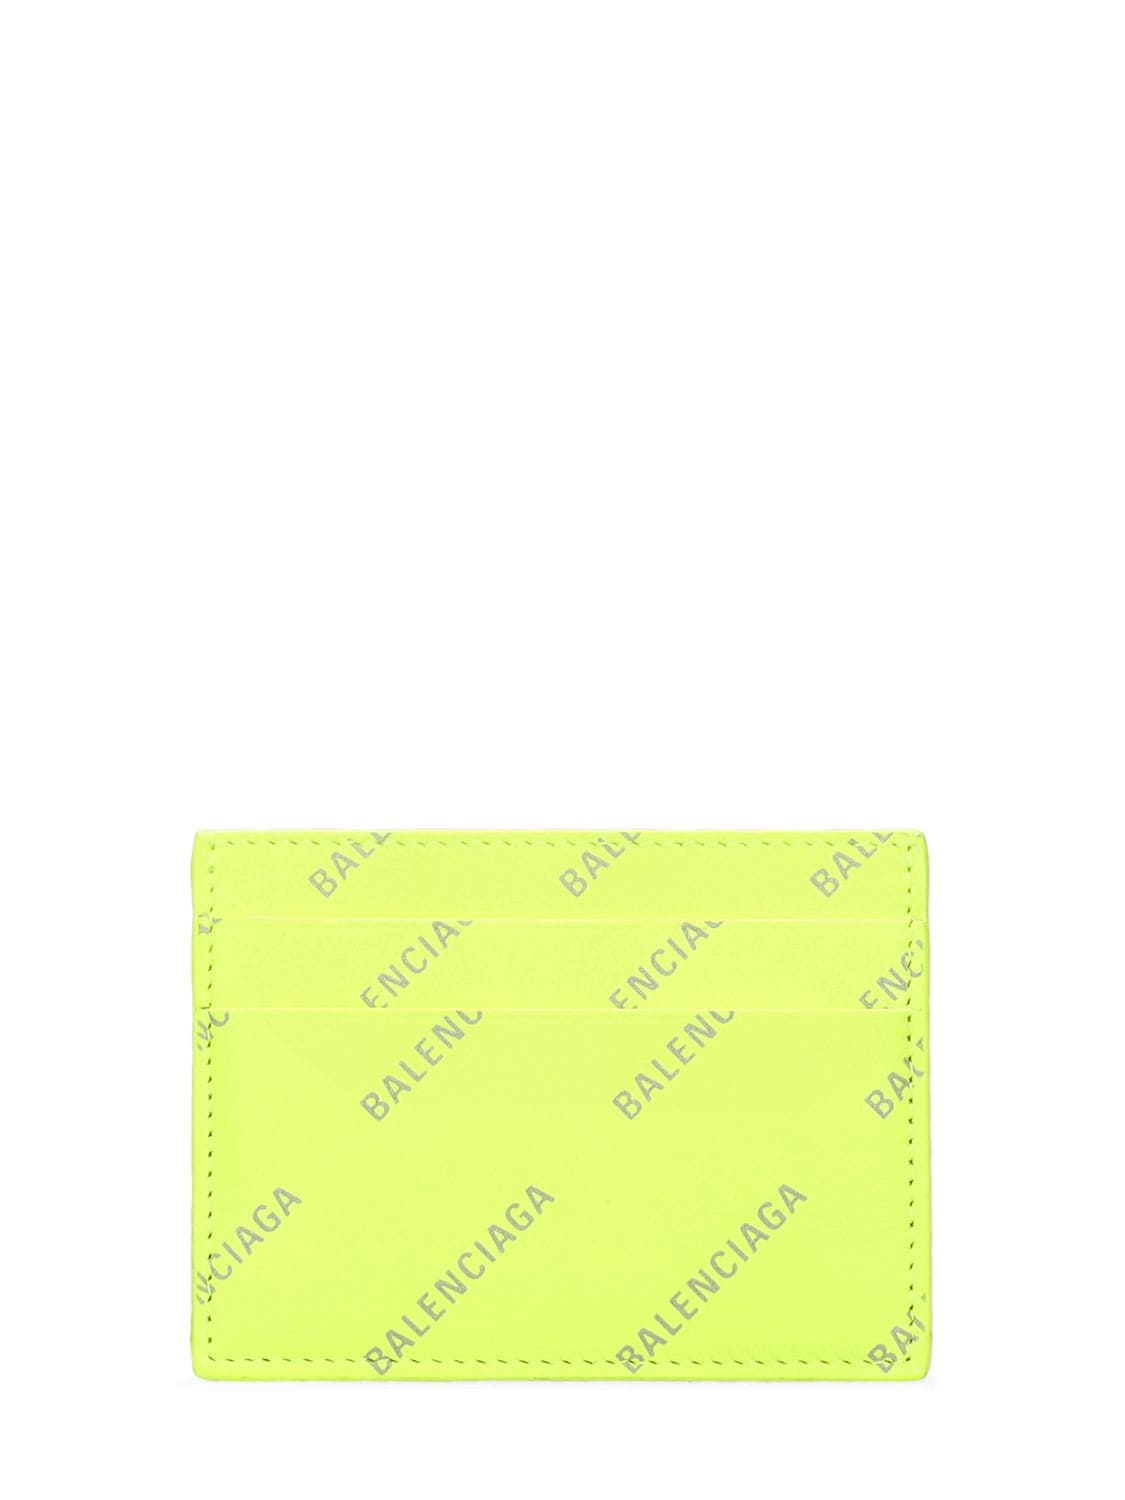 Balenciaga Leather Credit Card Holder In Neon Yellow